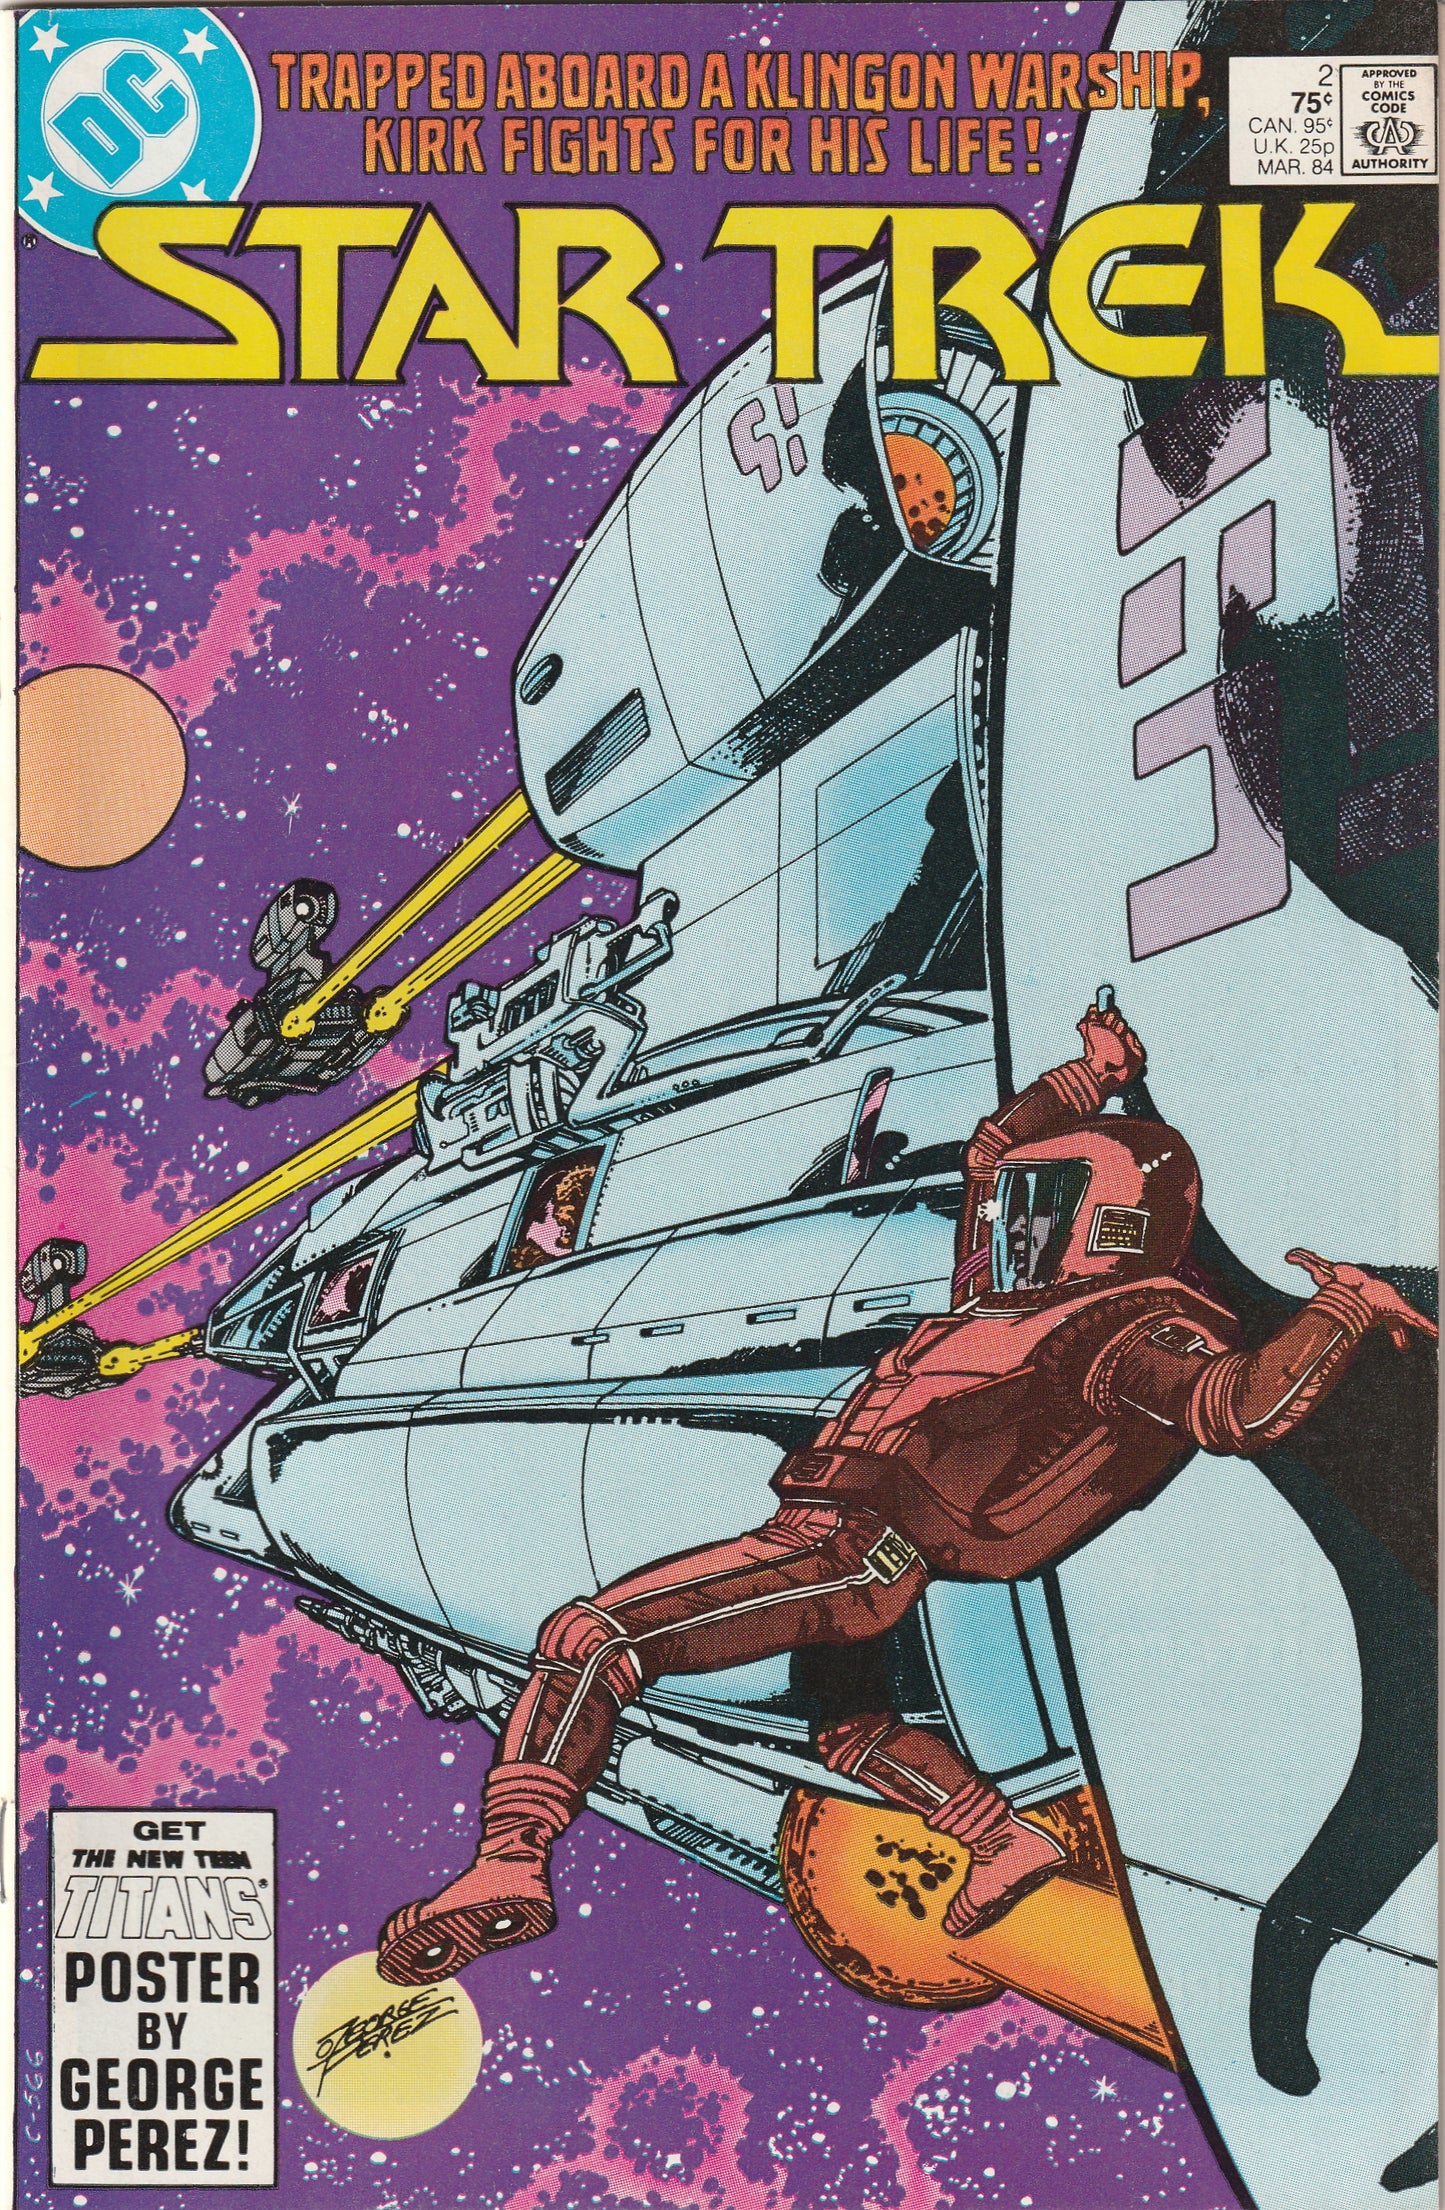 Star Trek #2 (1984) - George Perez cover